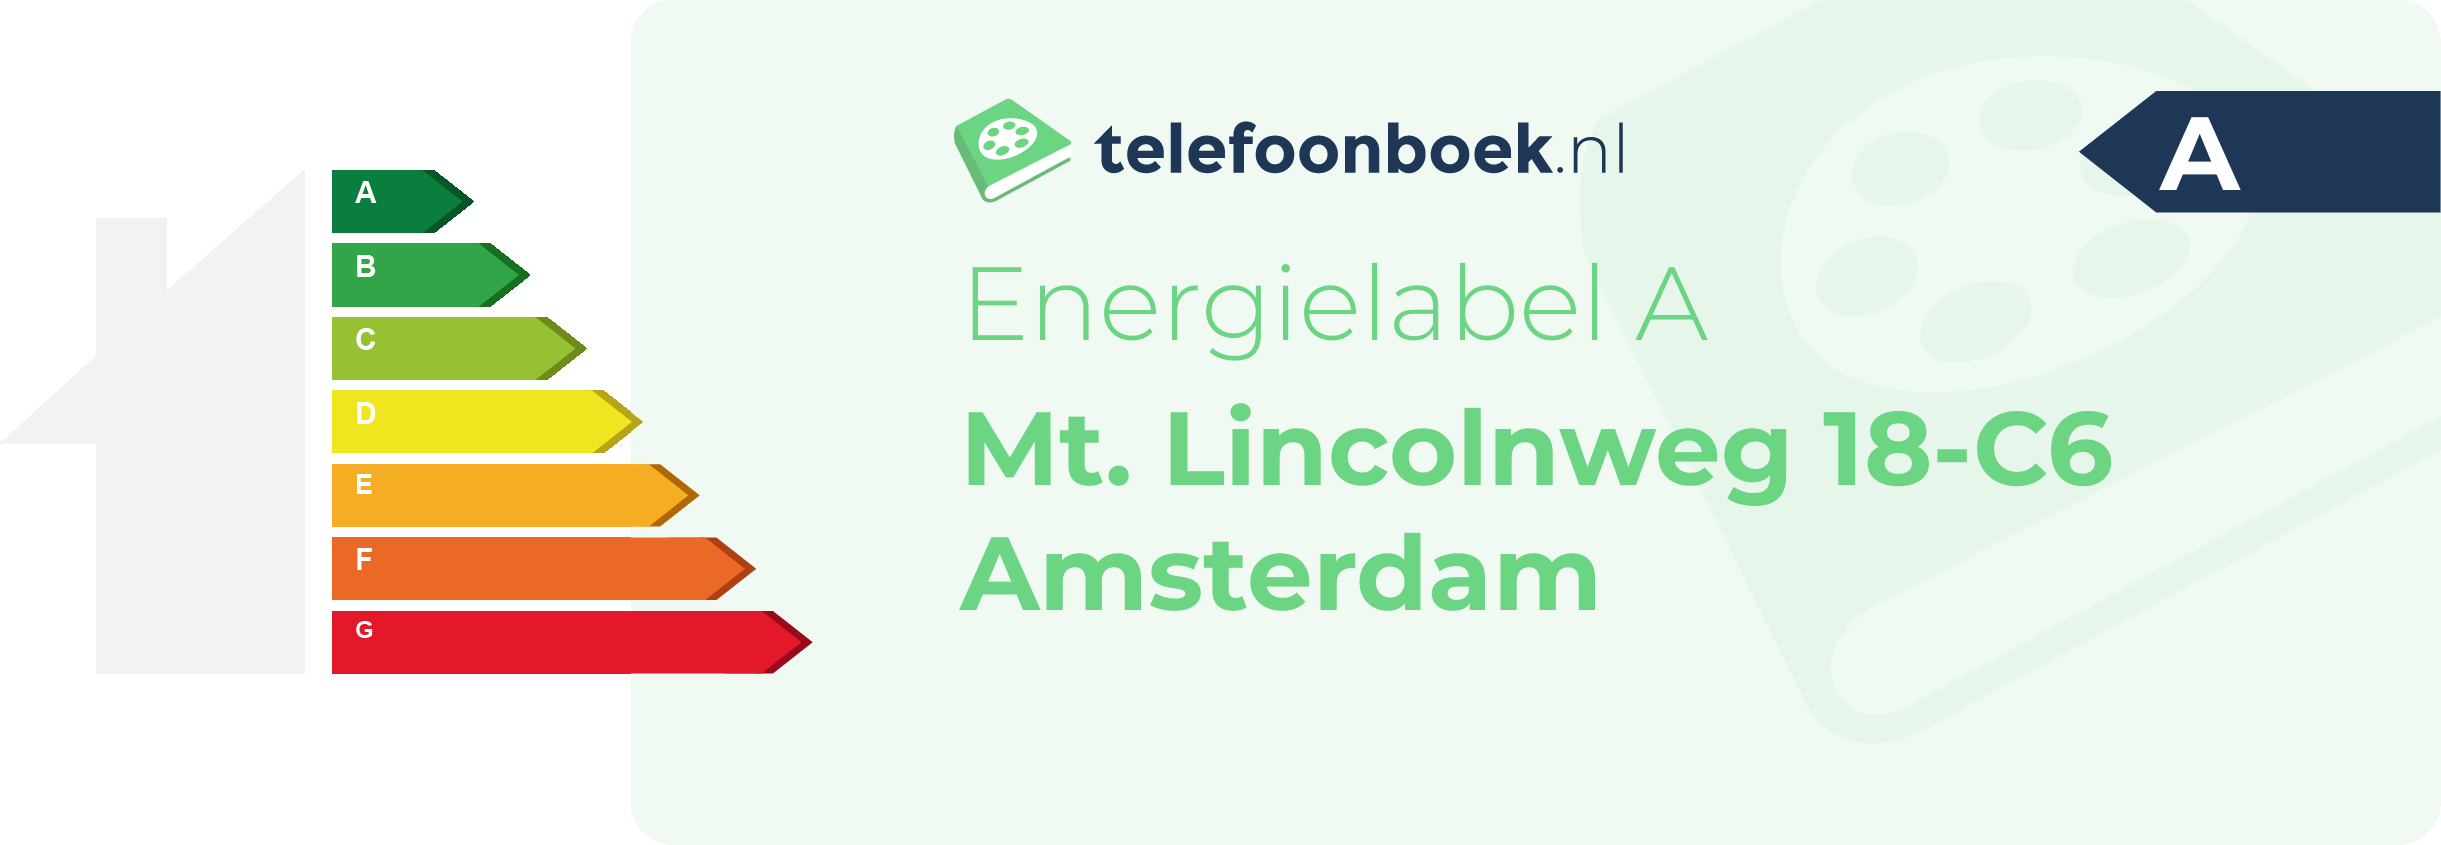 Energielabel Mt. Lincolnweg 18-C6 Amsterdam